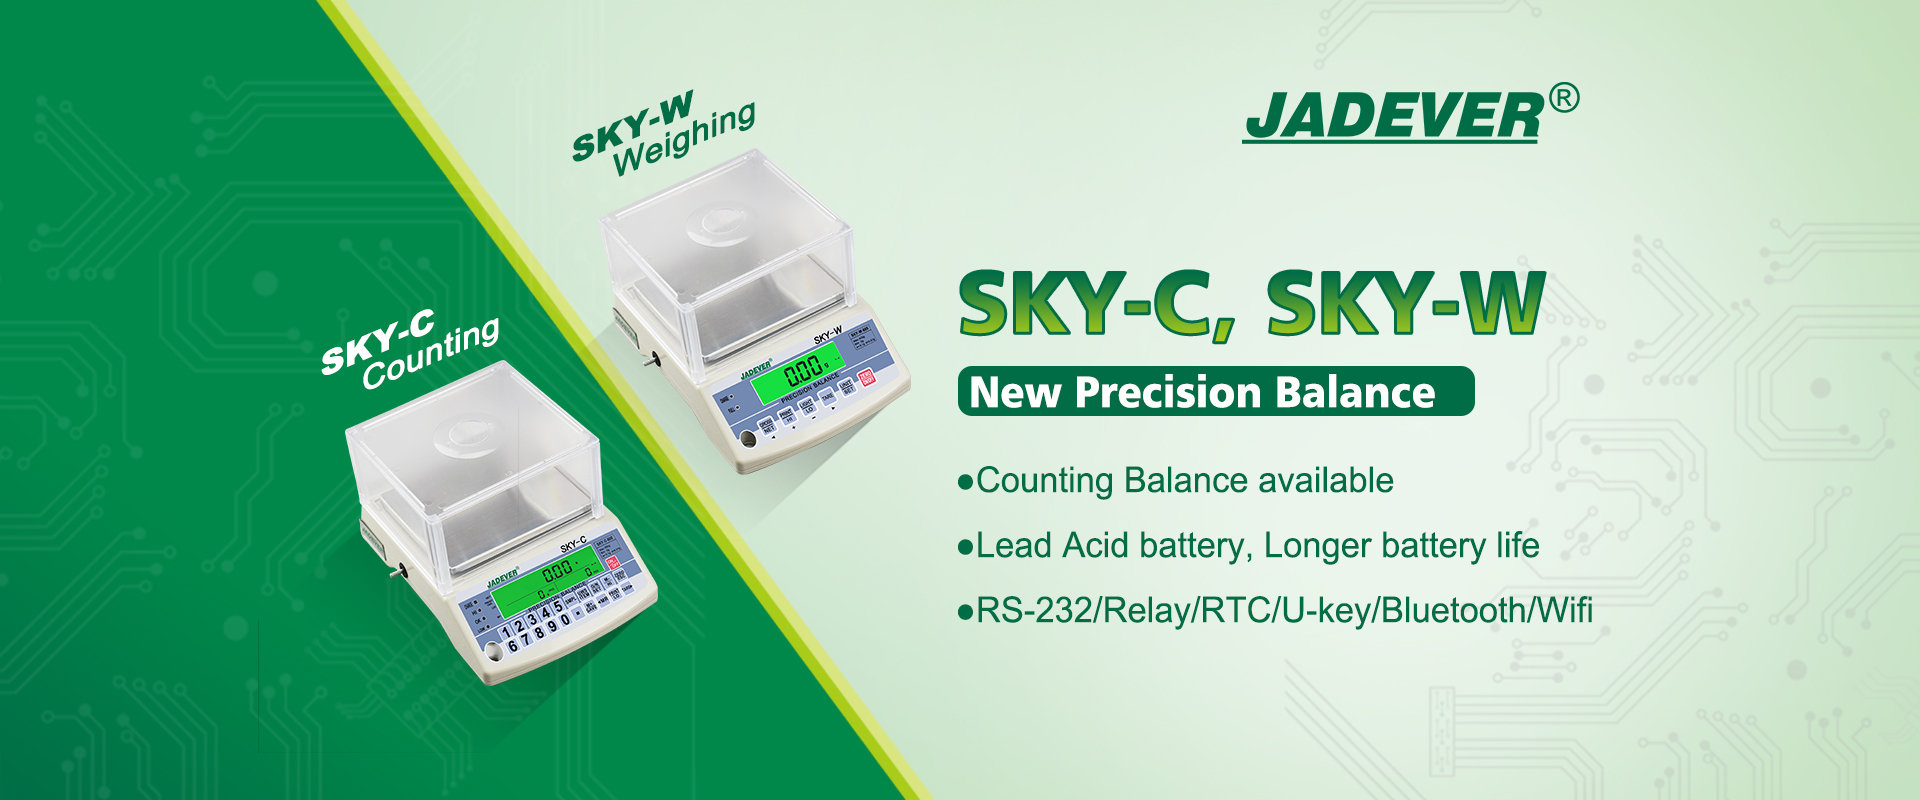 Jadever SKY-W Weighing Balance and SKY-C Counting Balance